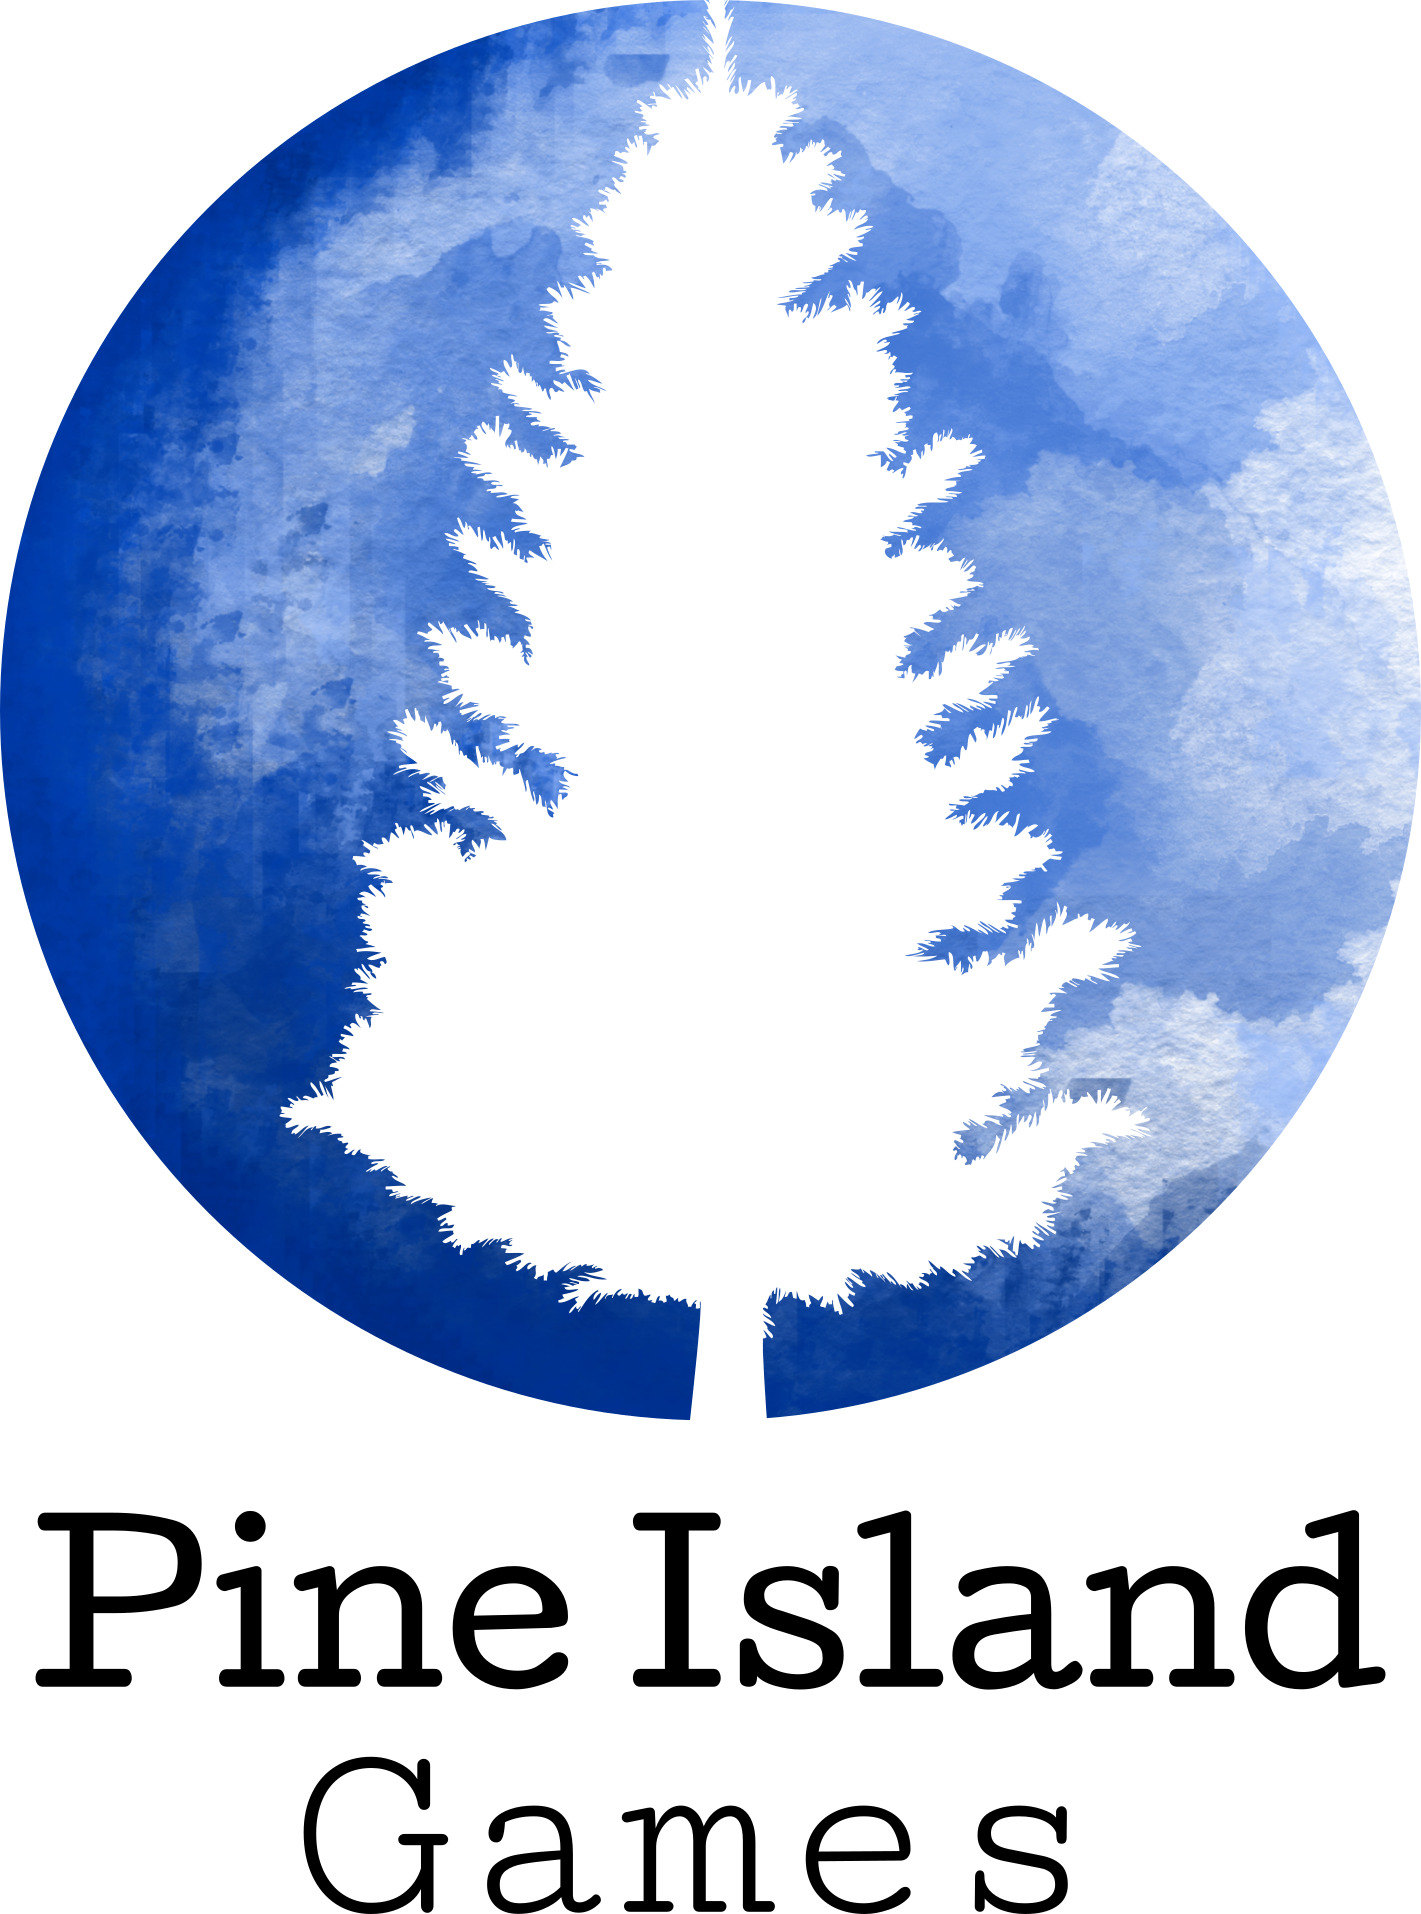 Pine Island Games